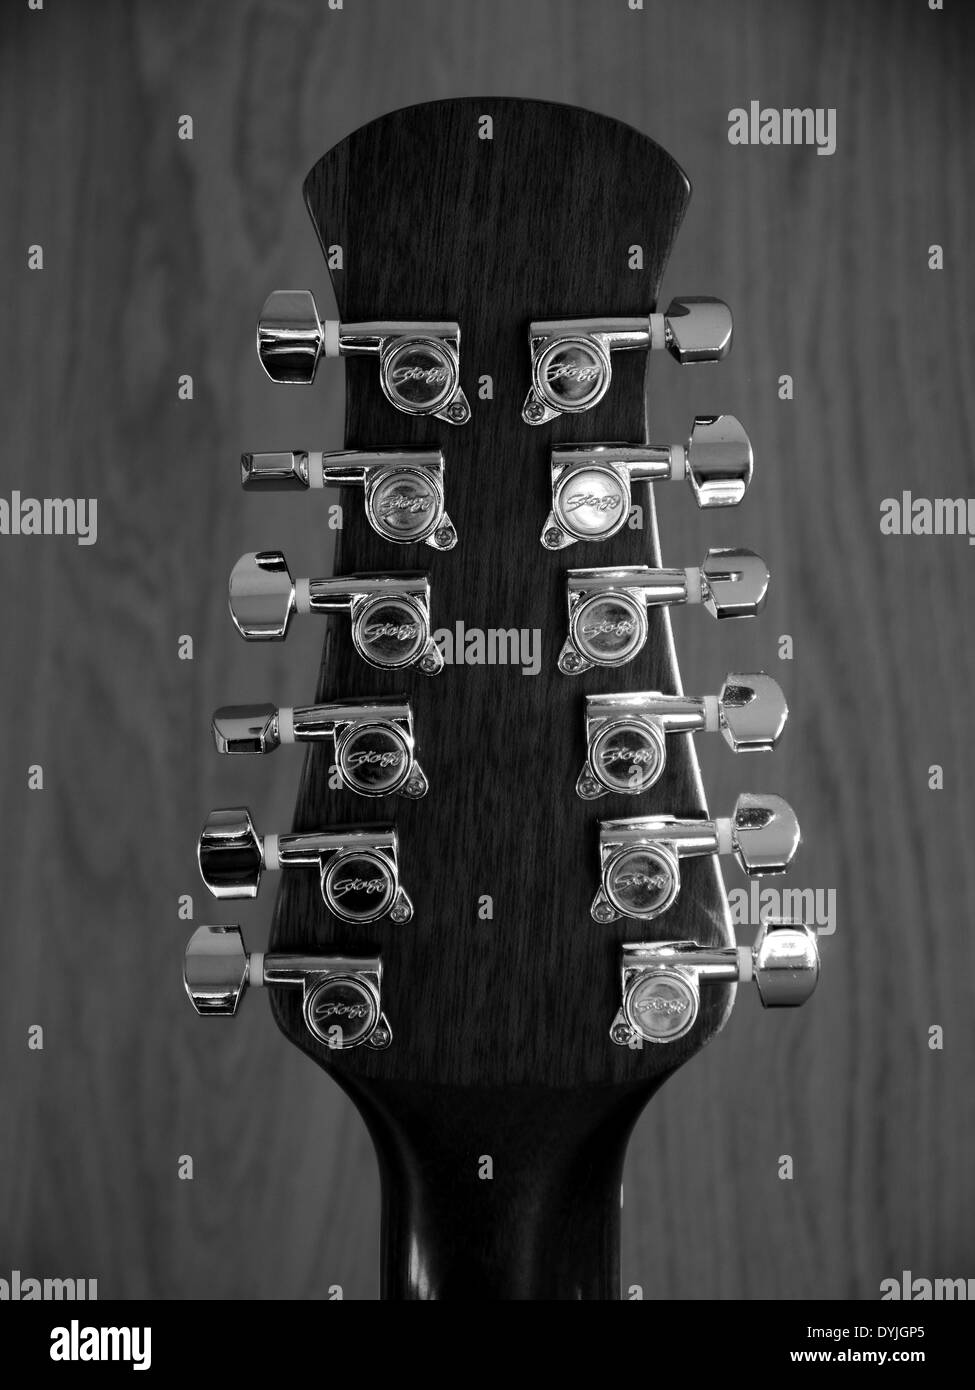 Spindelstock 12 string Stagg Elektro/Akustik-Gitarre mit Chrom tuning  Stifte - Rückansicht - Monochrom Stockfotografie - Alamy